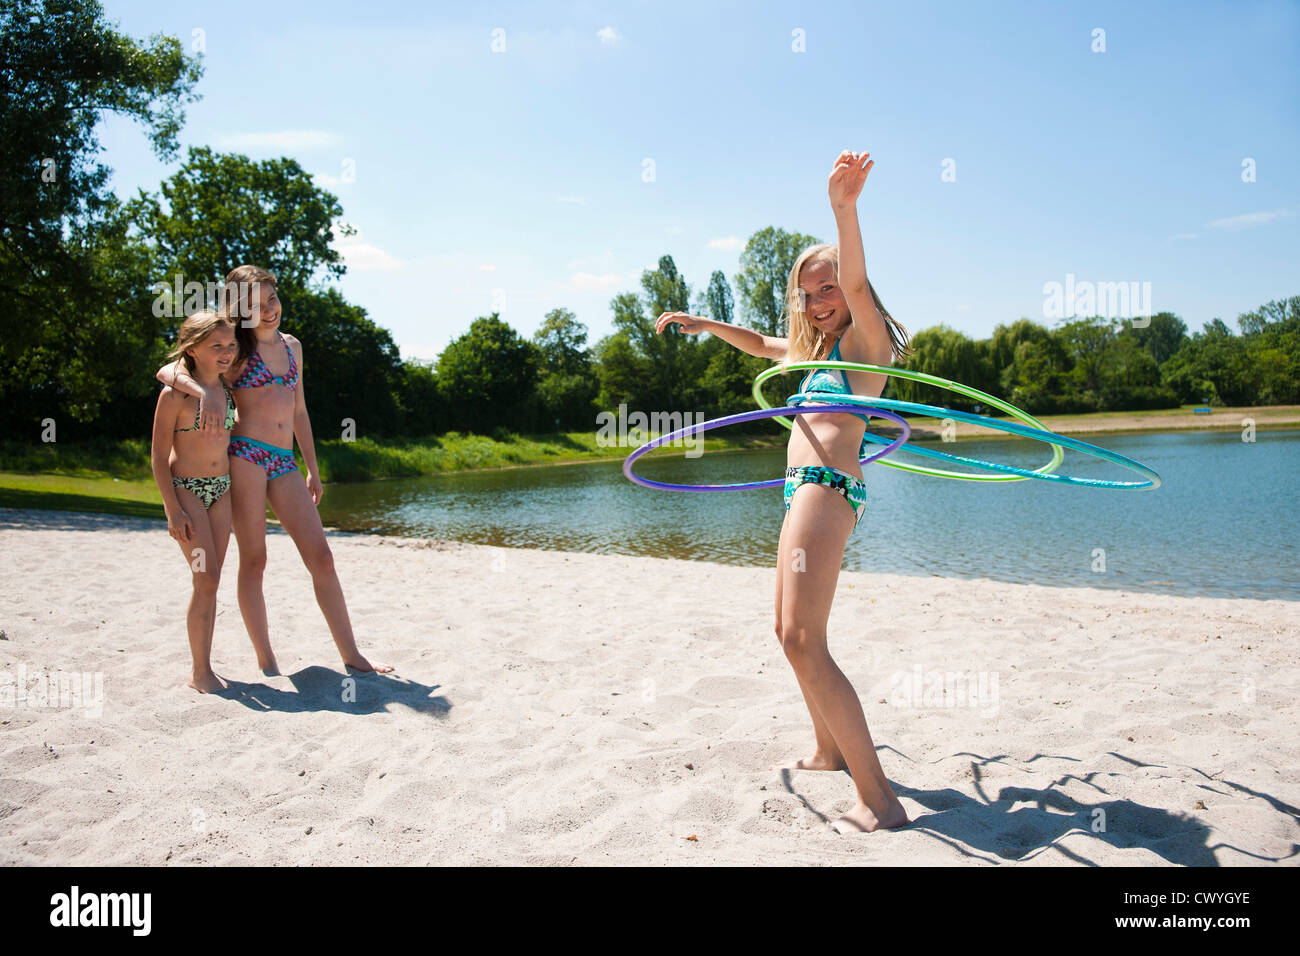 Drei Mädchen In Bikinis Mit Hula Hoop Am Badesee Stockfotografie Alamy 